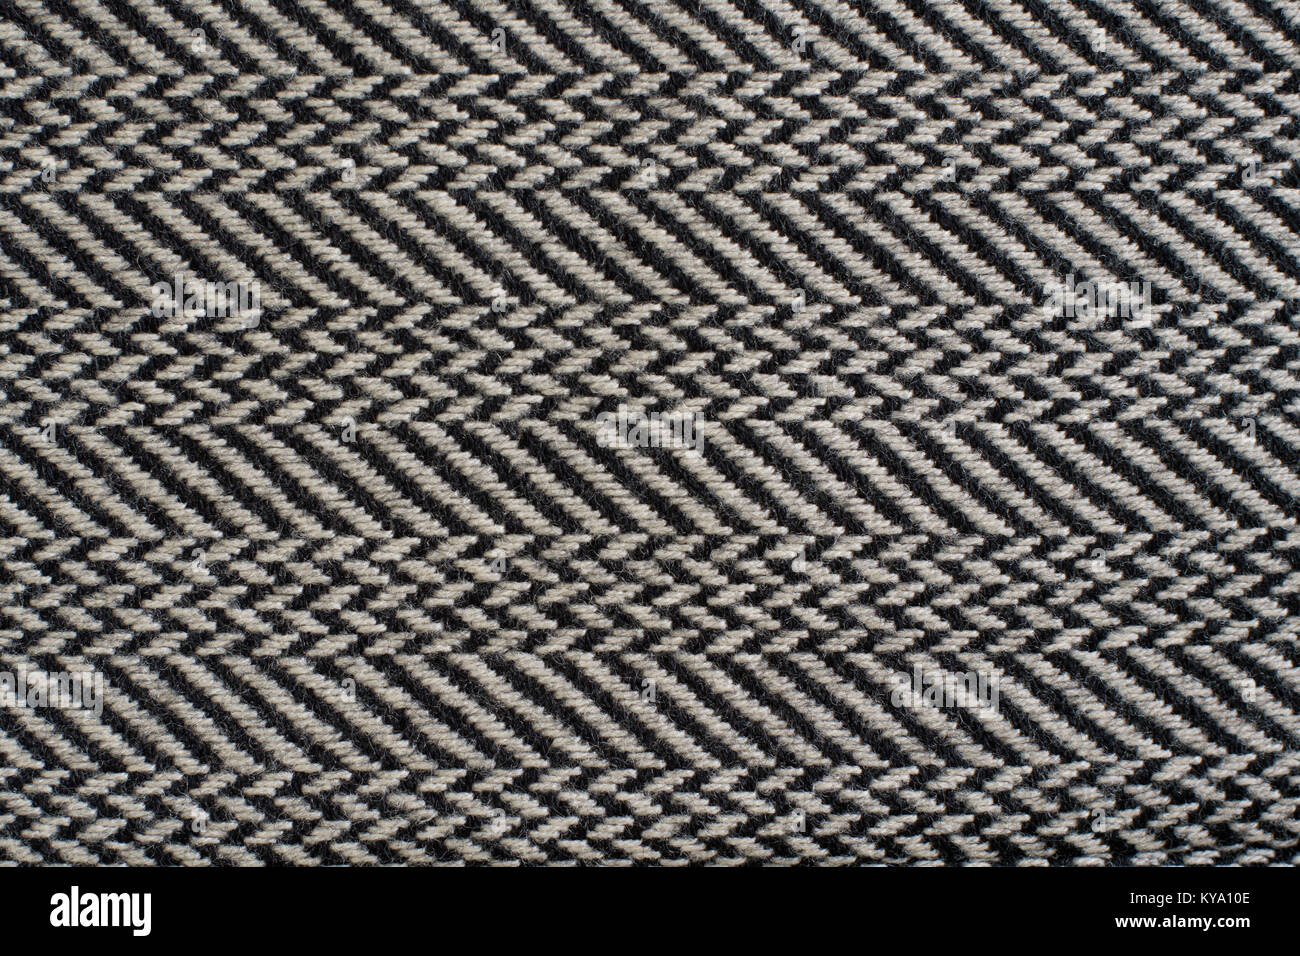 https://c8.alamy.com/comp/KYA10E/herringbone-broken-twill-weave-a-distinctive-v-shaped-weaving-pattern-KYA10E.jpg